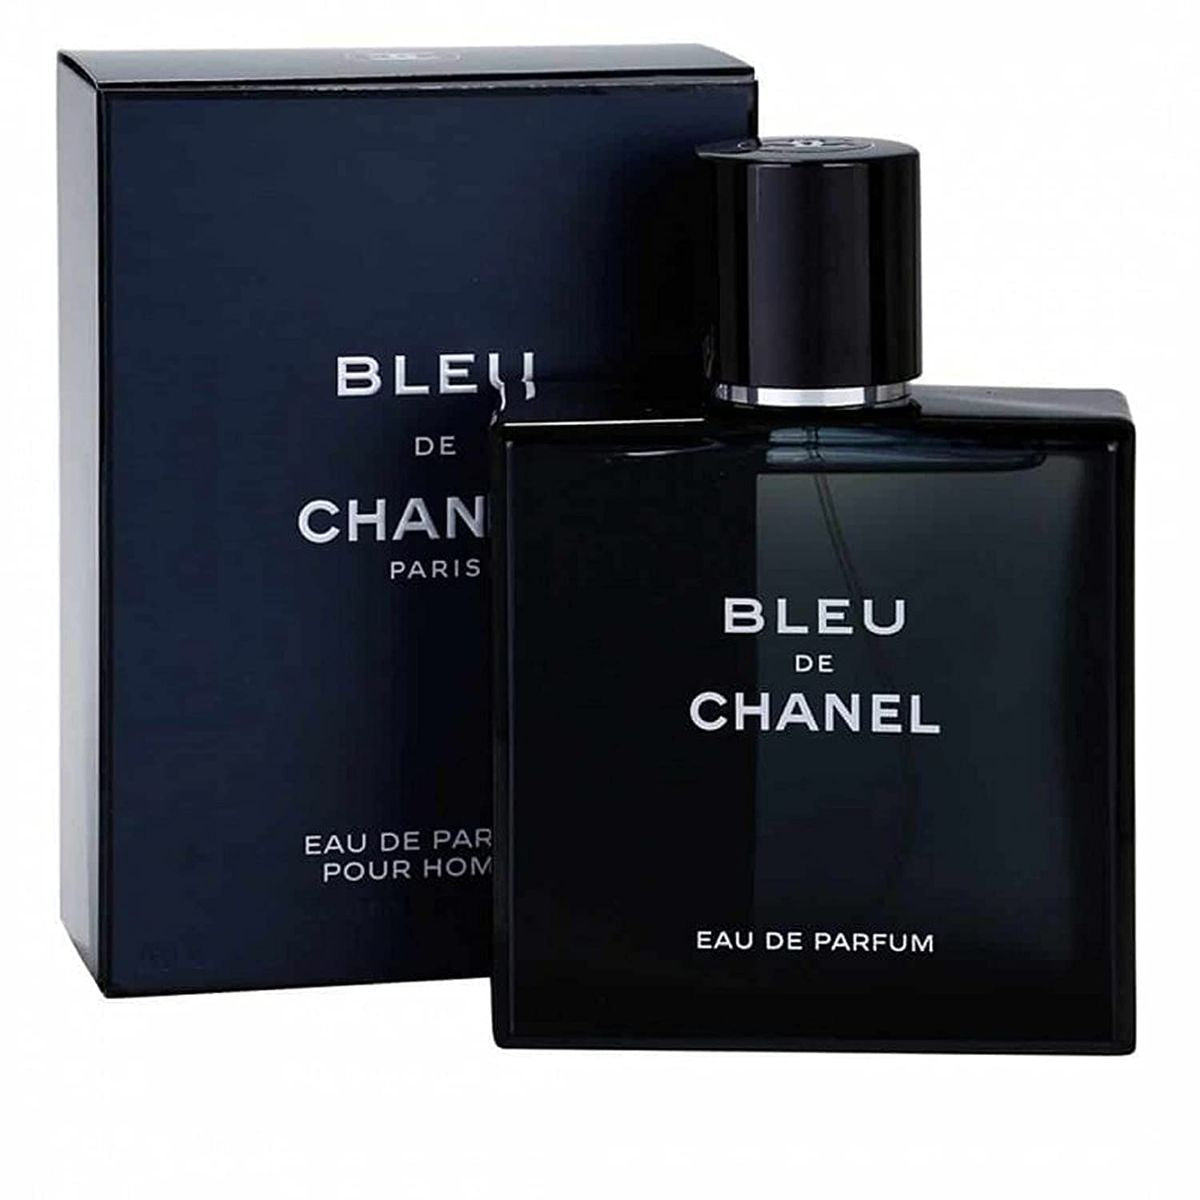 Bleu de Chanel for him